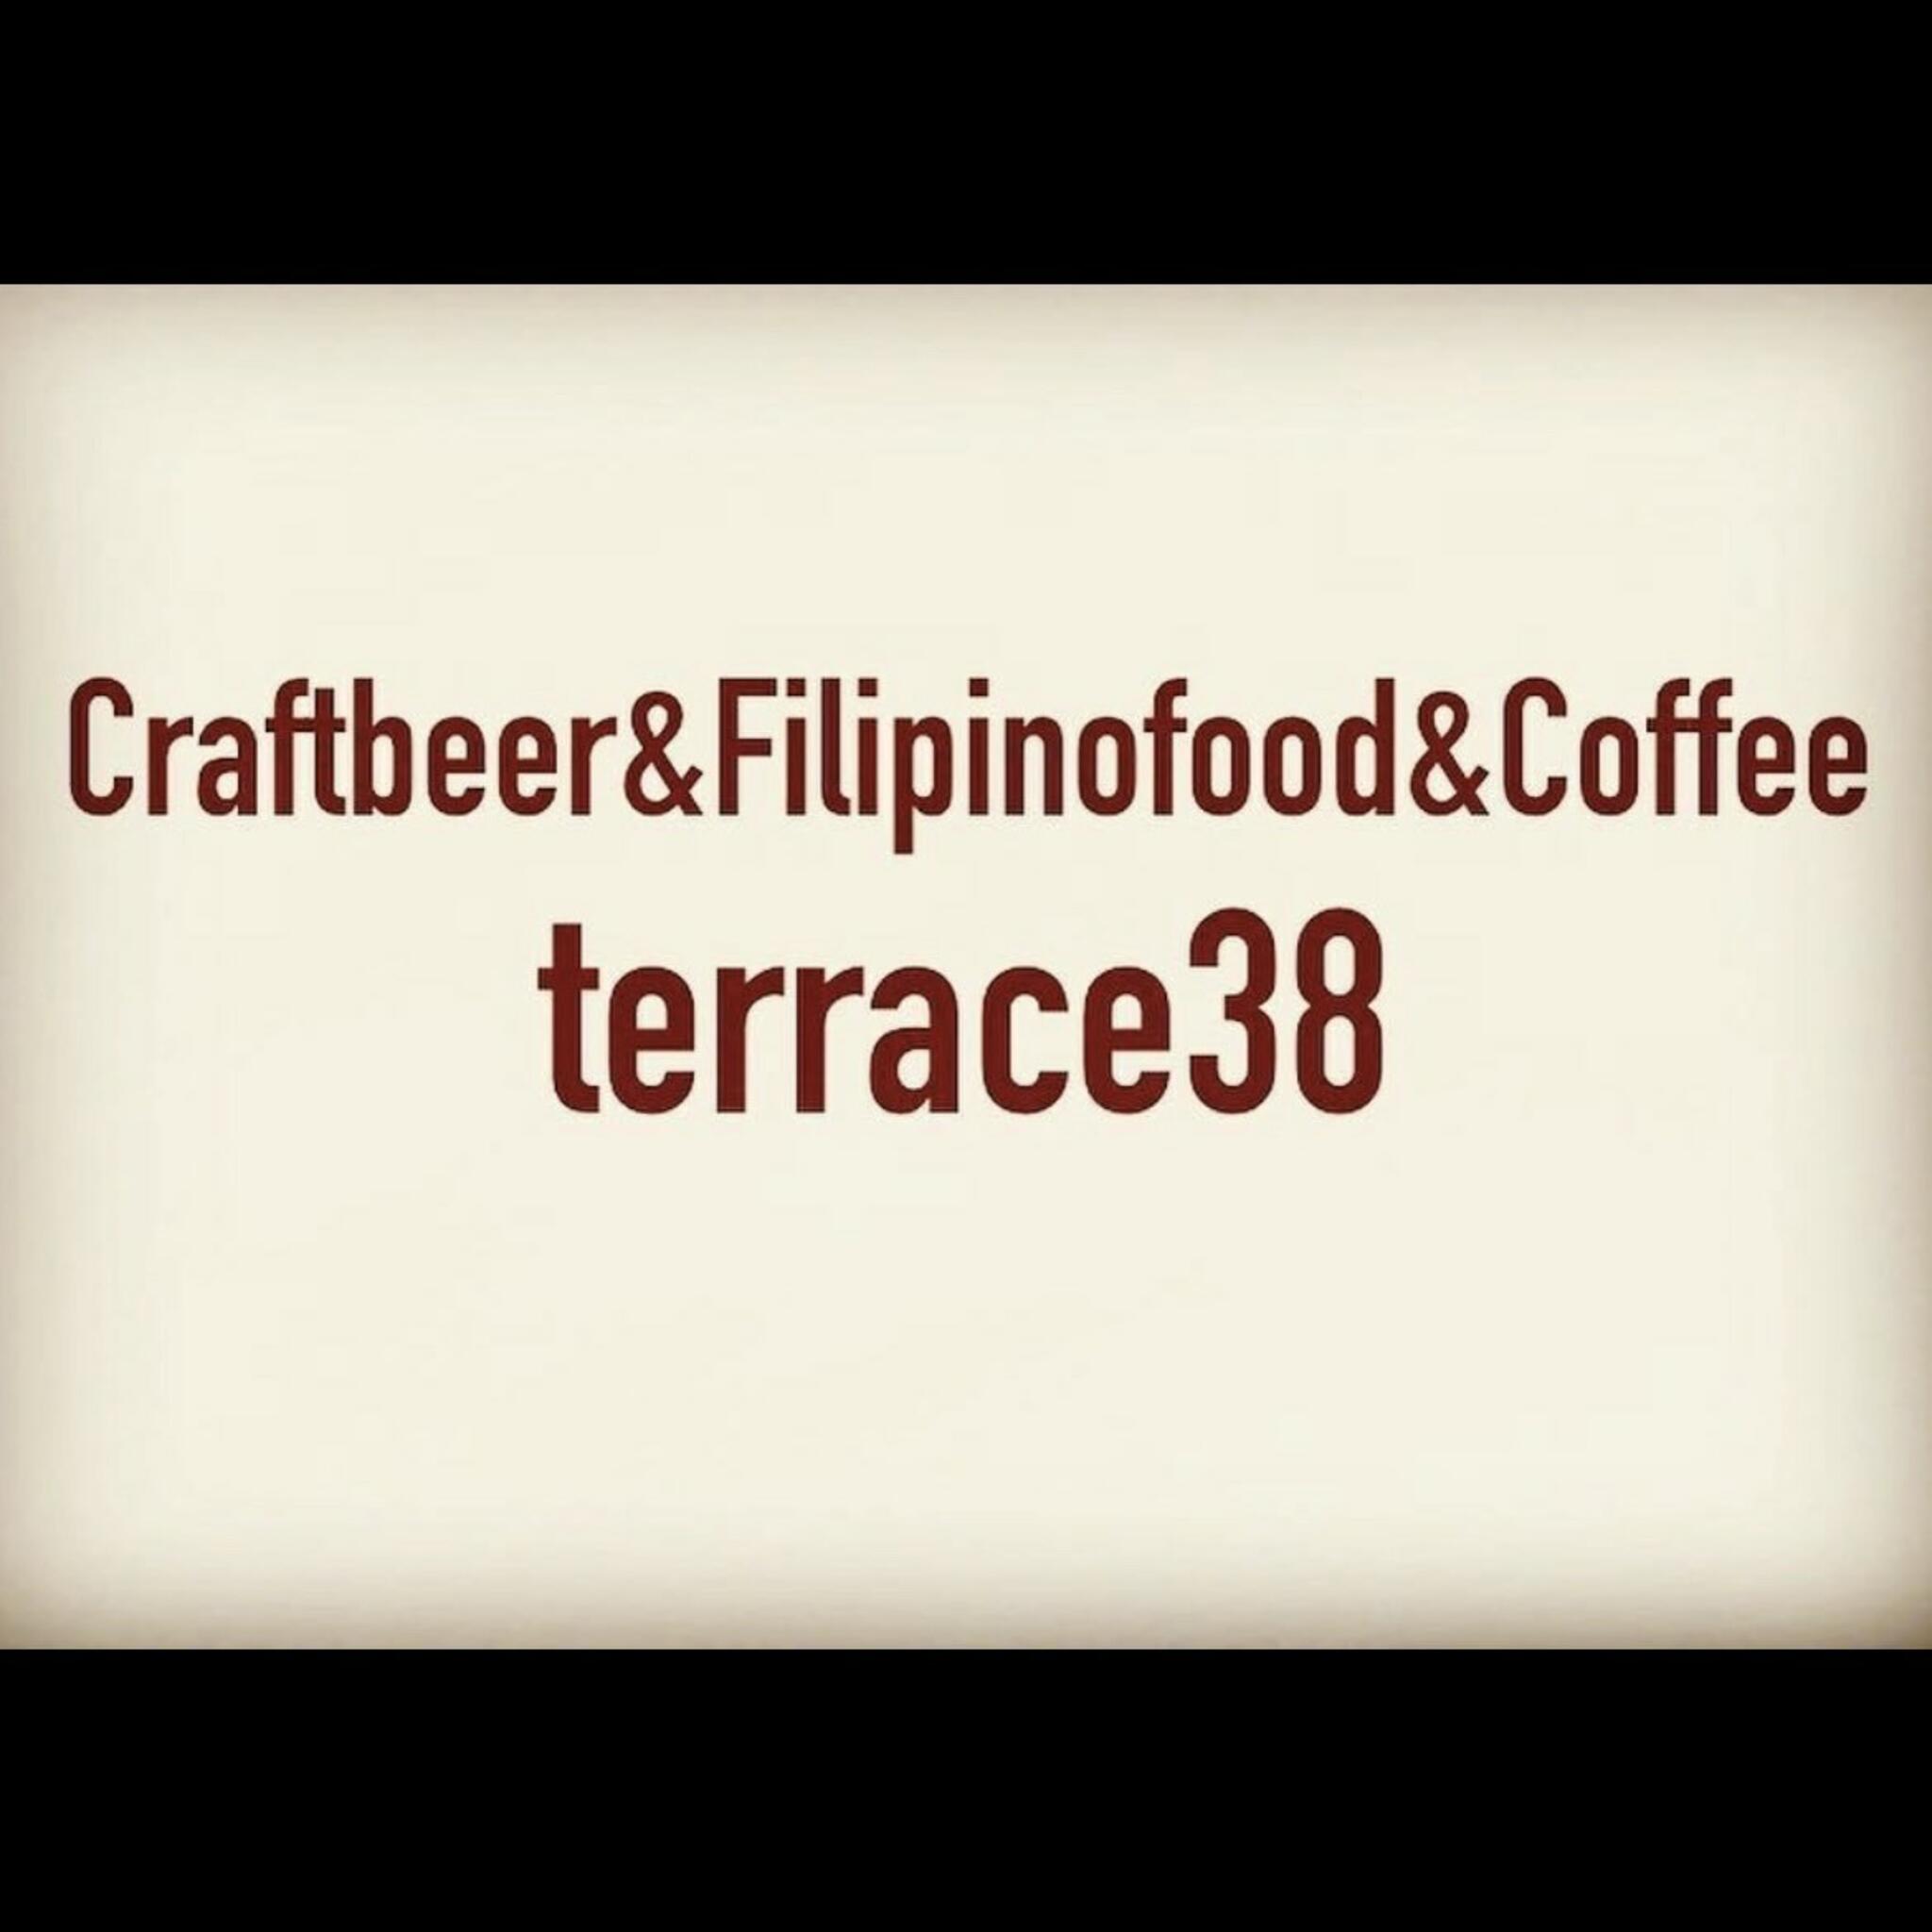 Craftbeer＆Filipinofood＆Coffee terrace38の代表写真1